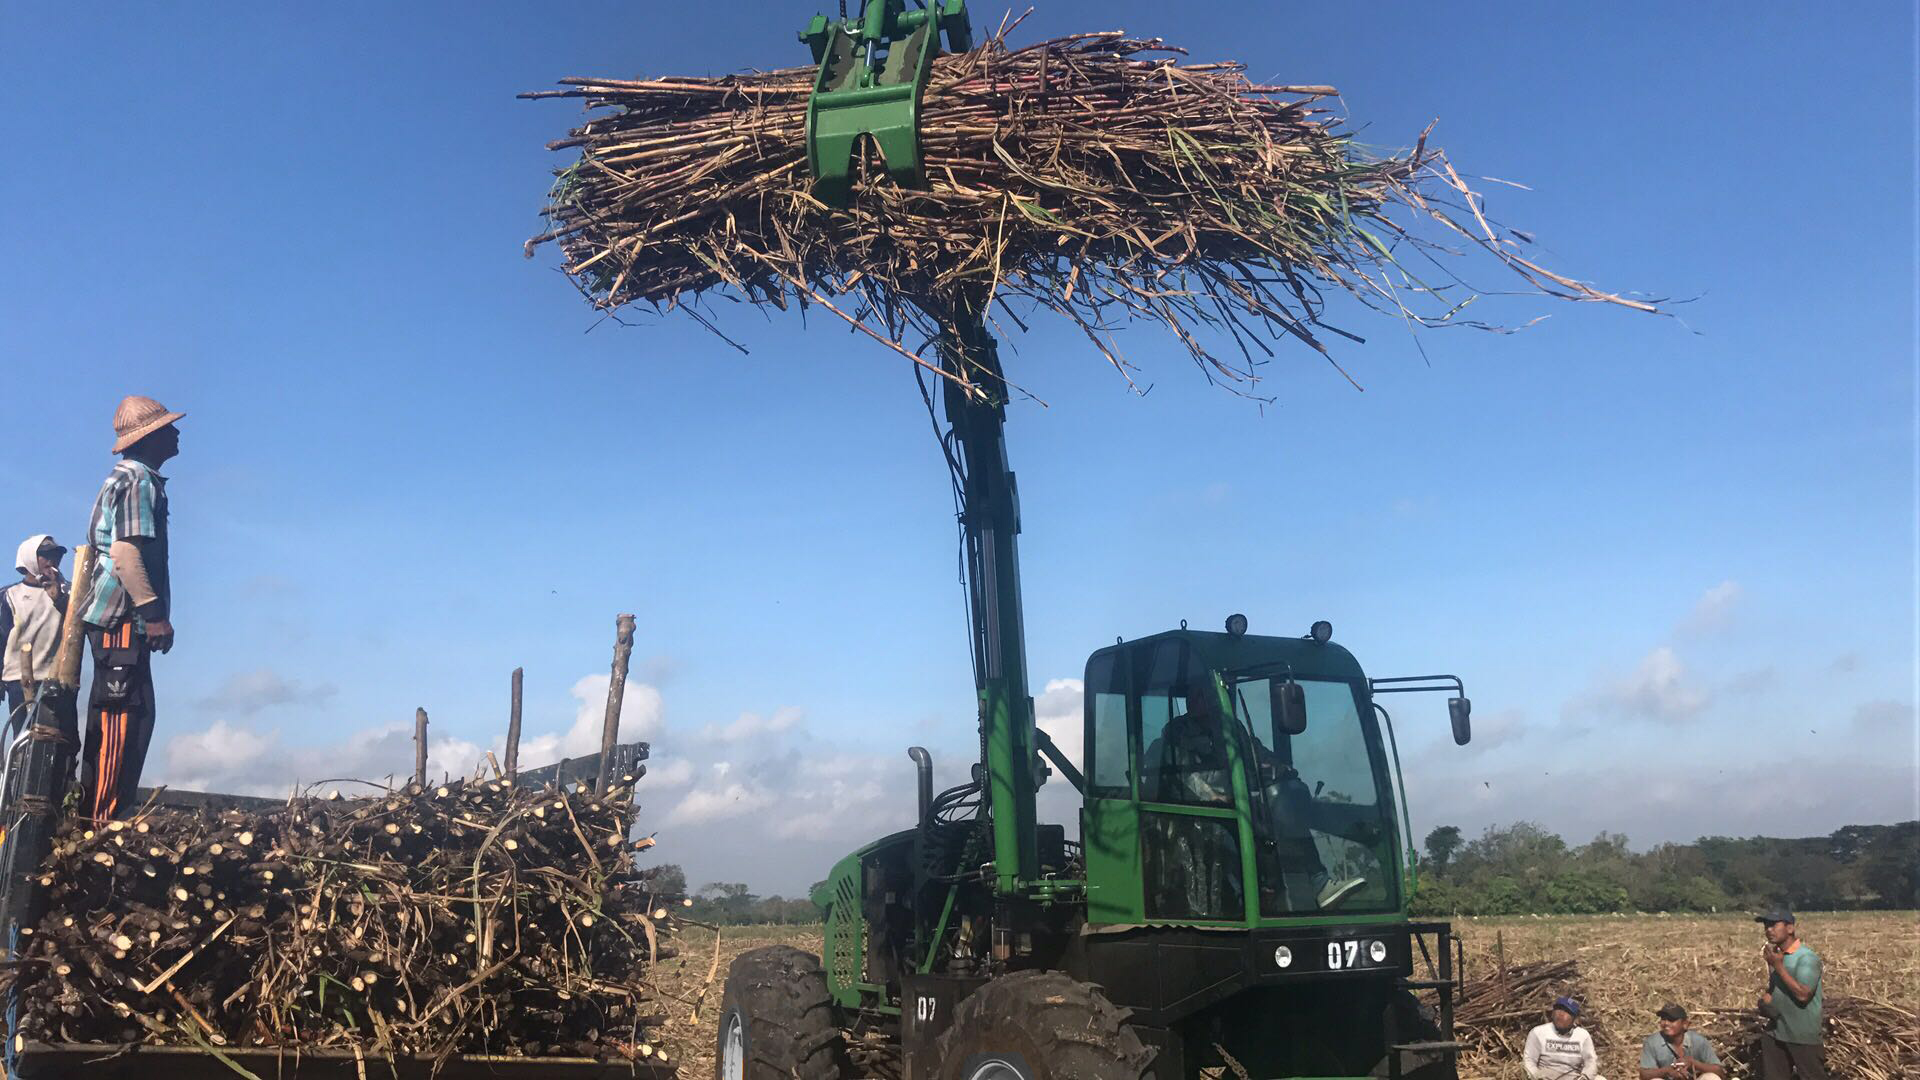 Sugarcane grab Loader